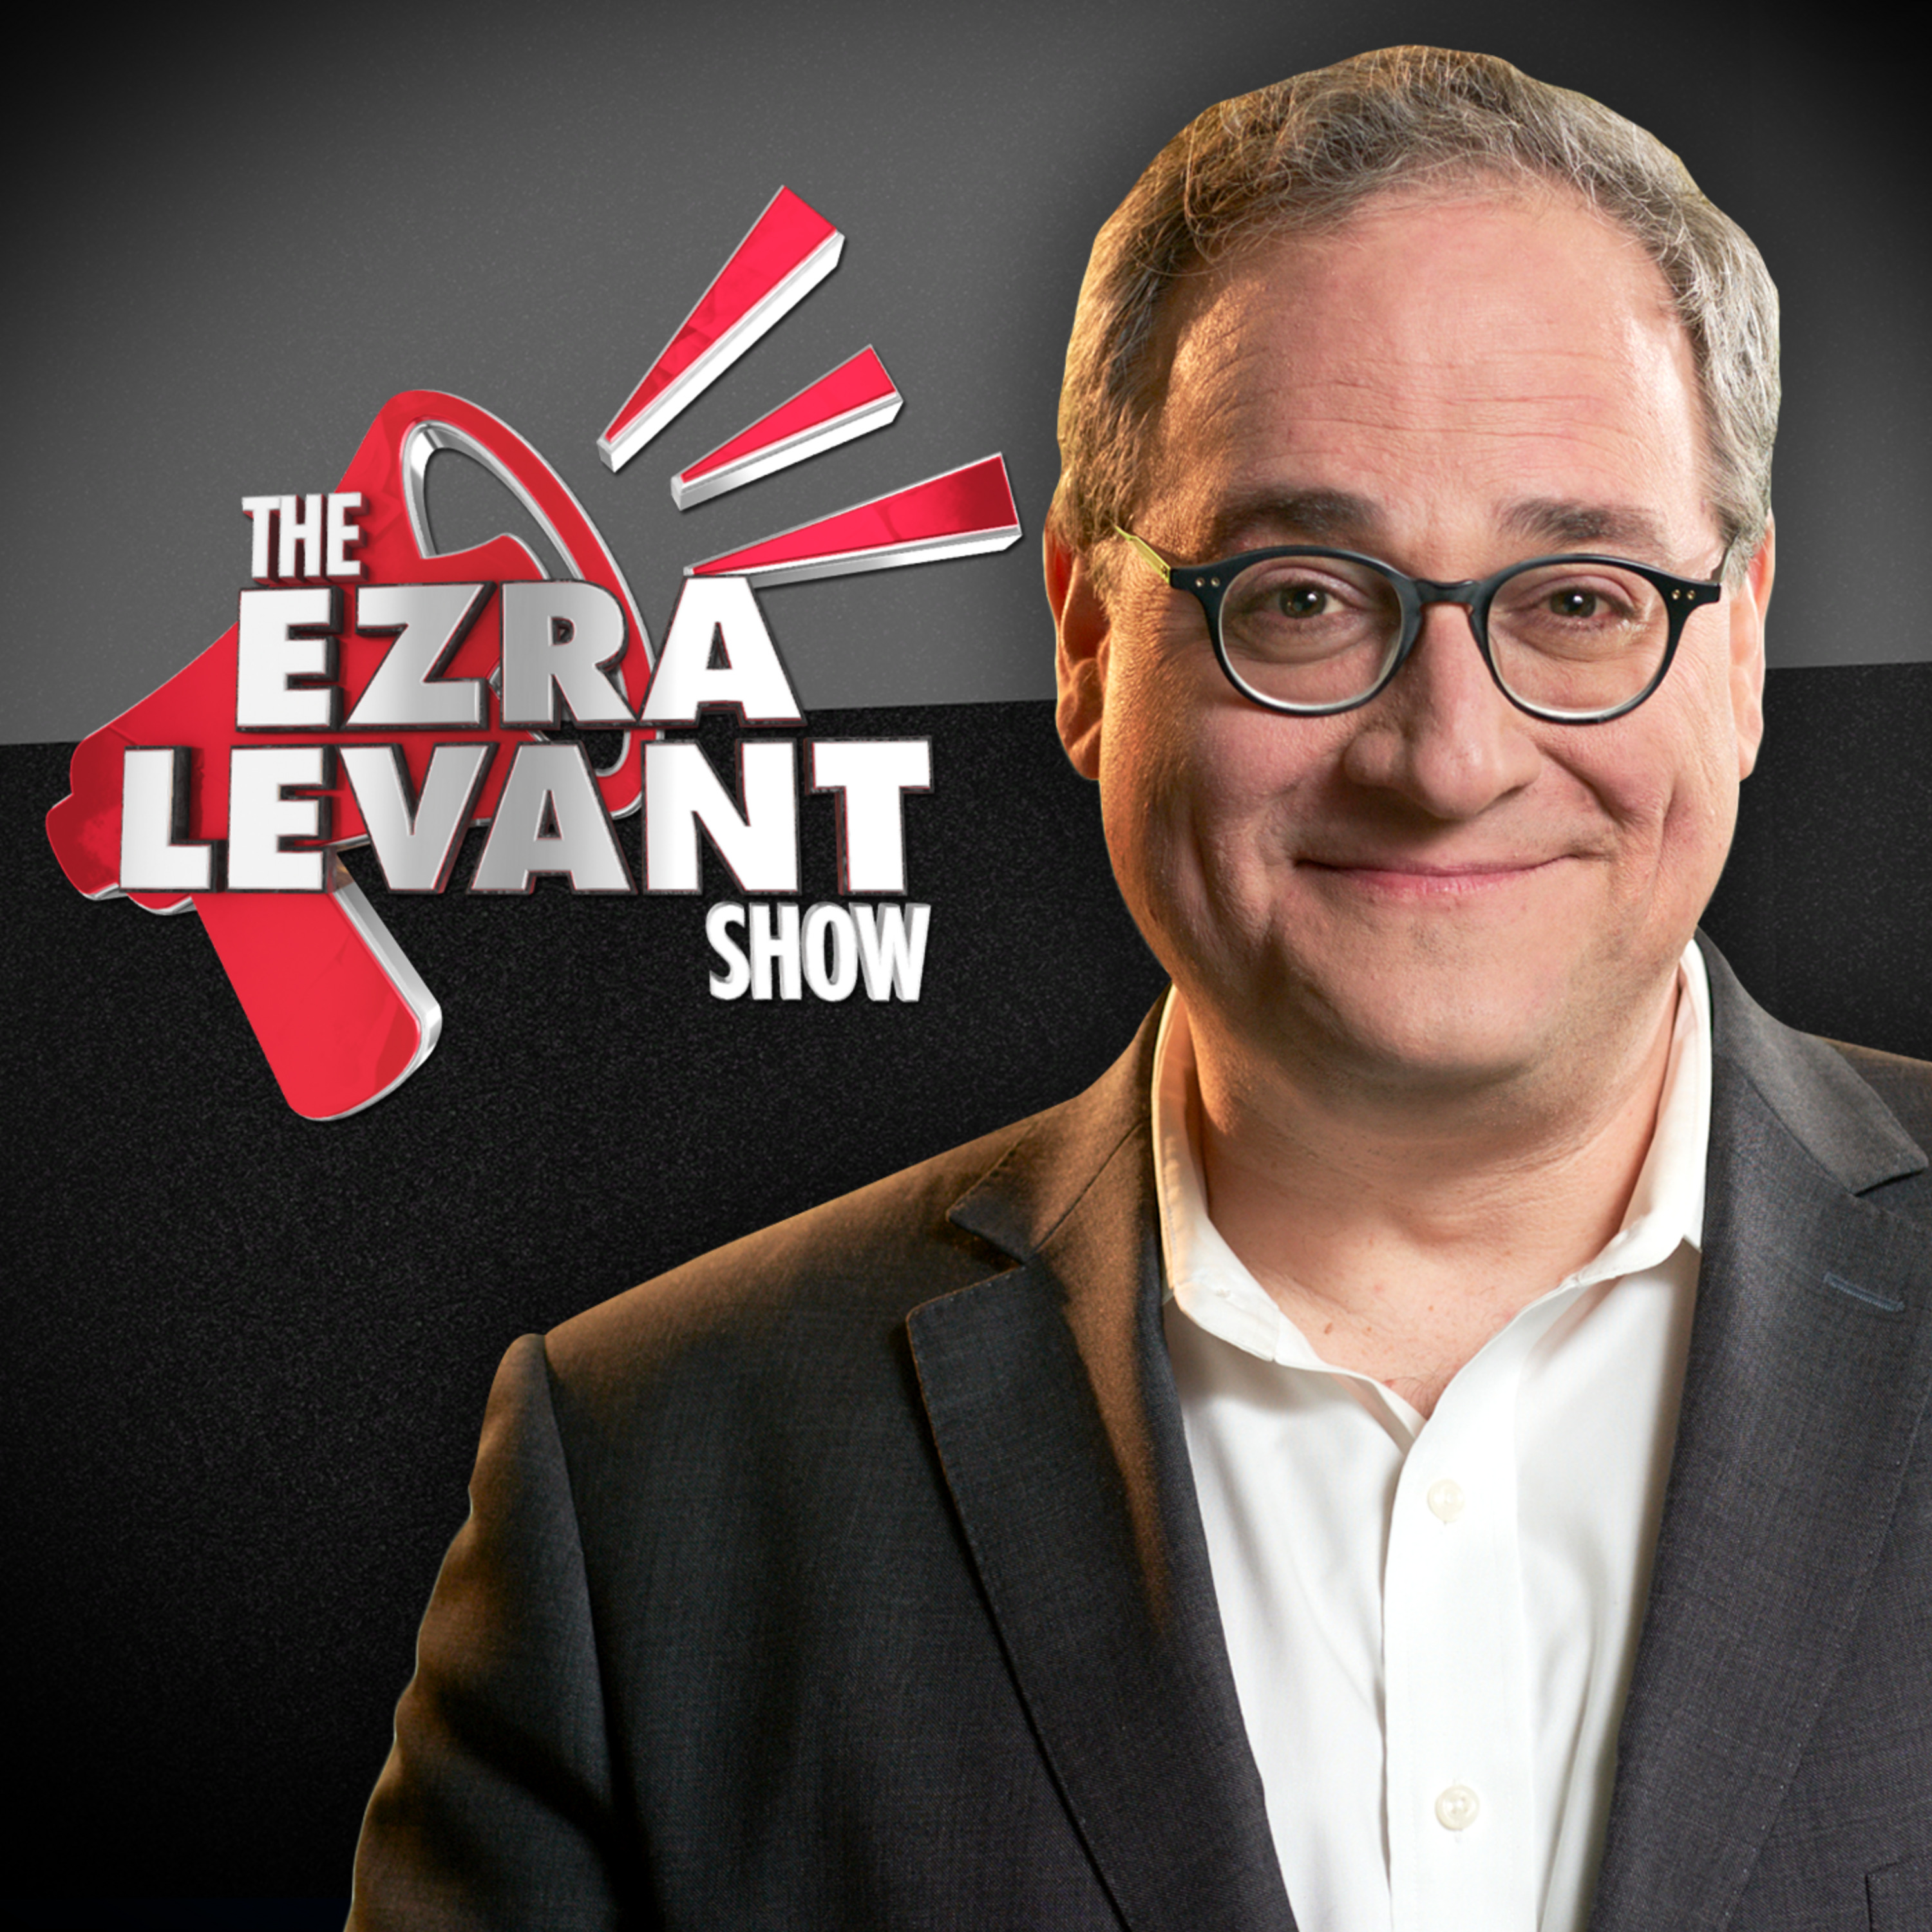 EZRA LEVANT | Justin Trudeau finally announces an end to his airplane vaccine mandate